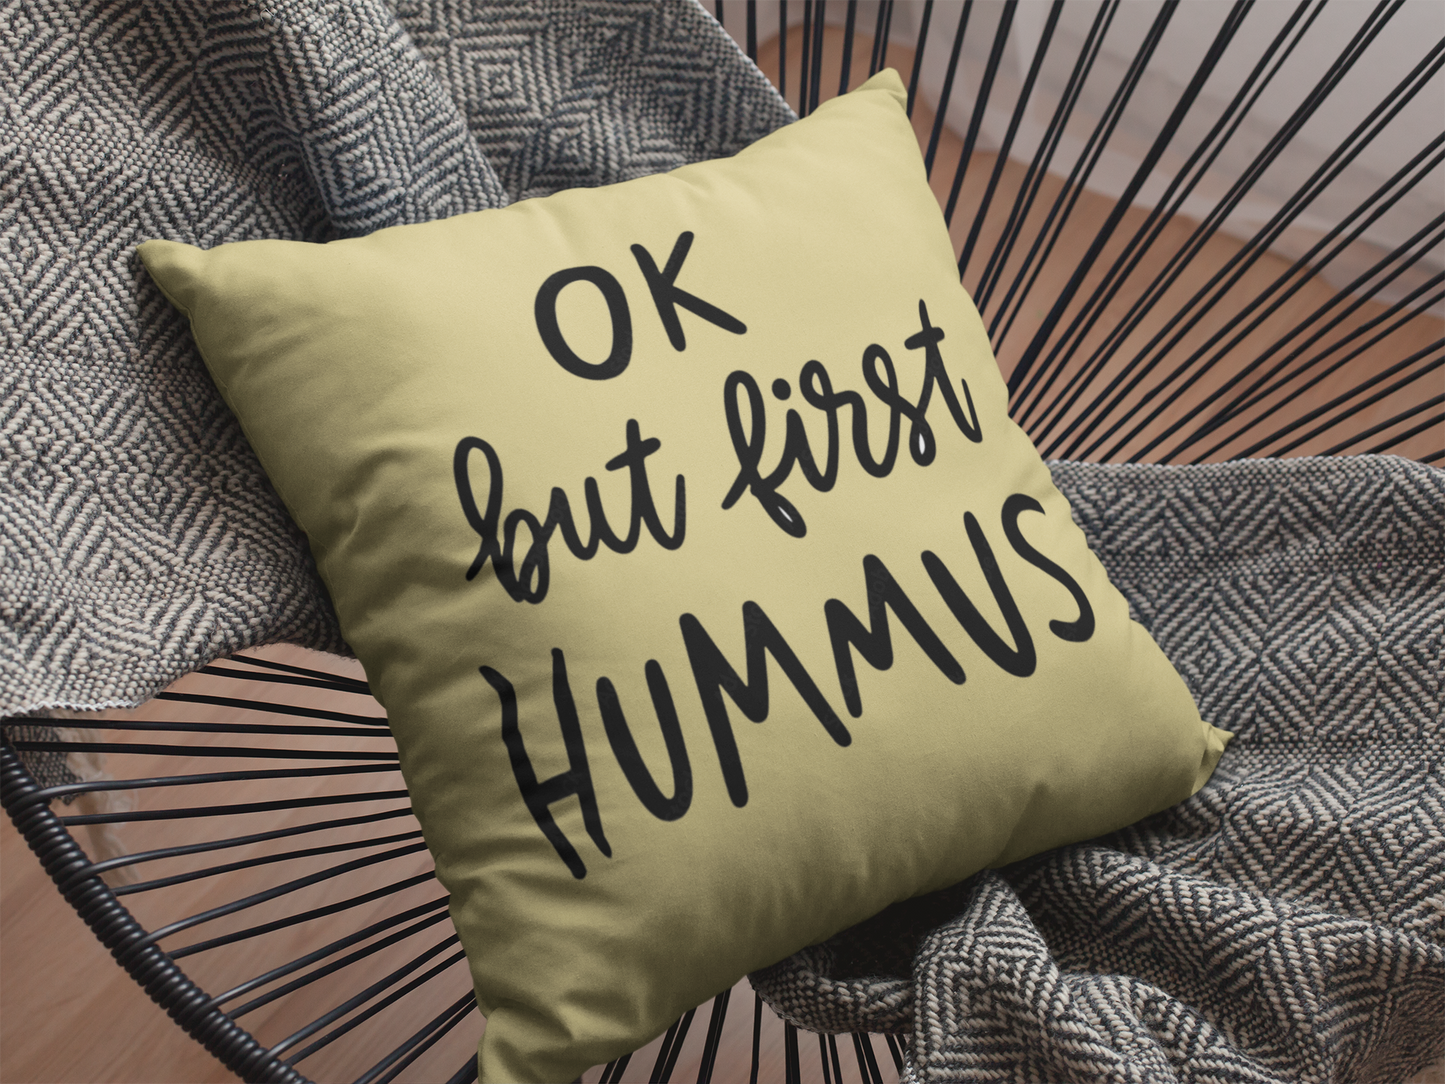 Ok But Fisrt Hummus Printed Cushion